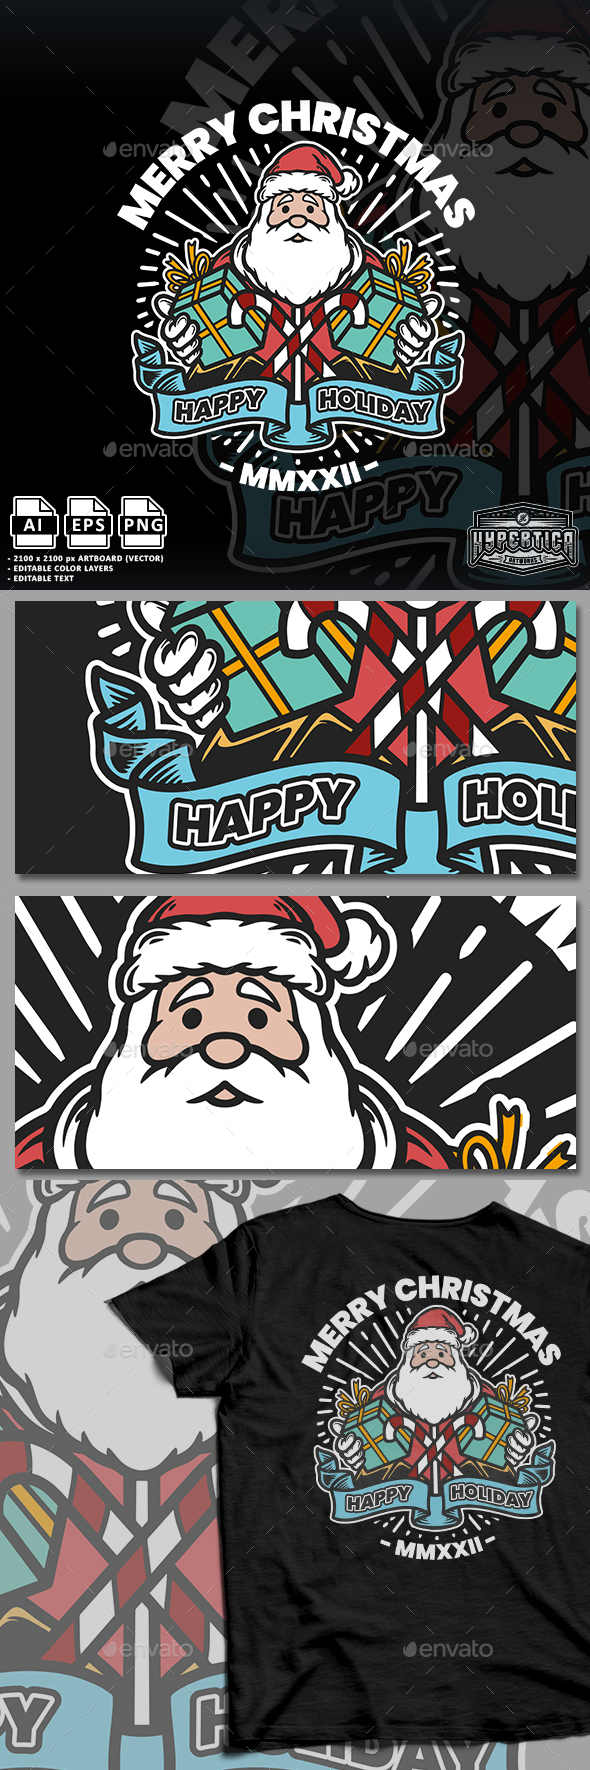 Santa Claus Christmas Illustration T-shirt Design